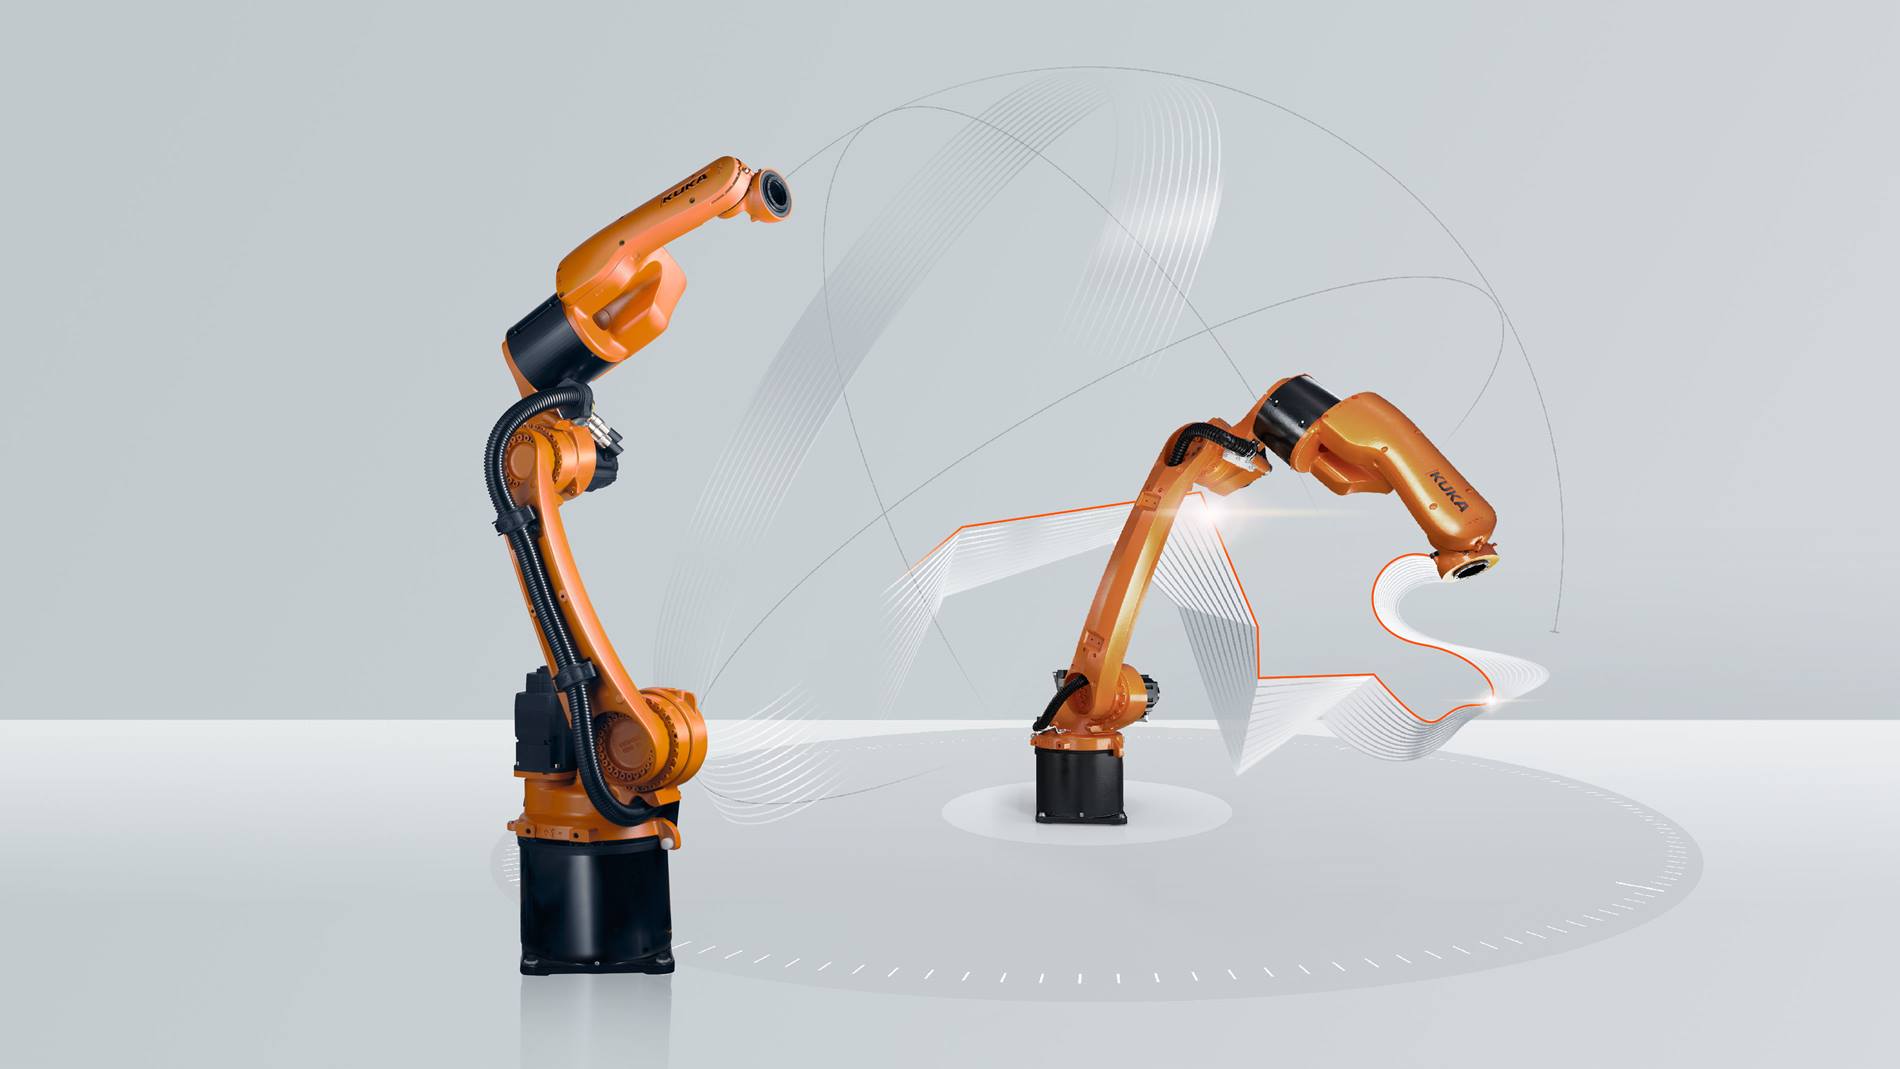 KR Cybertech ARC nano KUKA Robot Industrial para soldadura automatizada